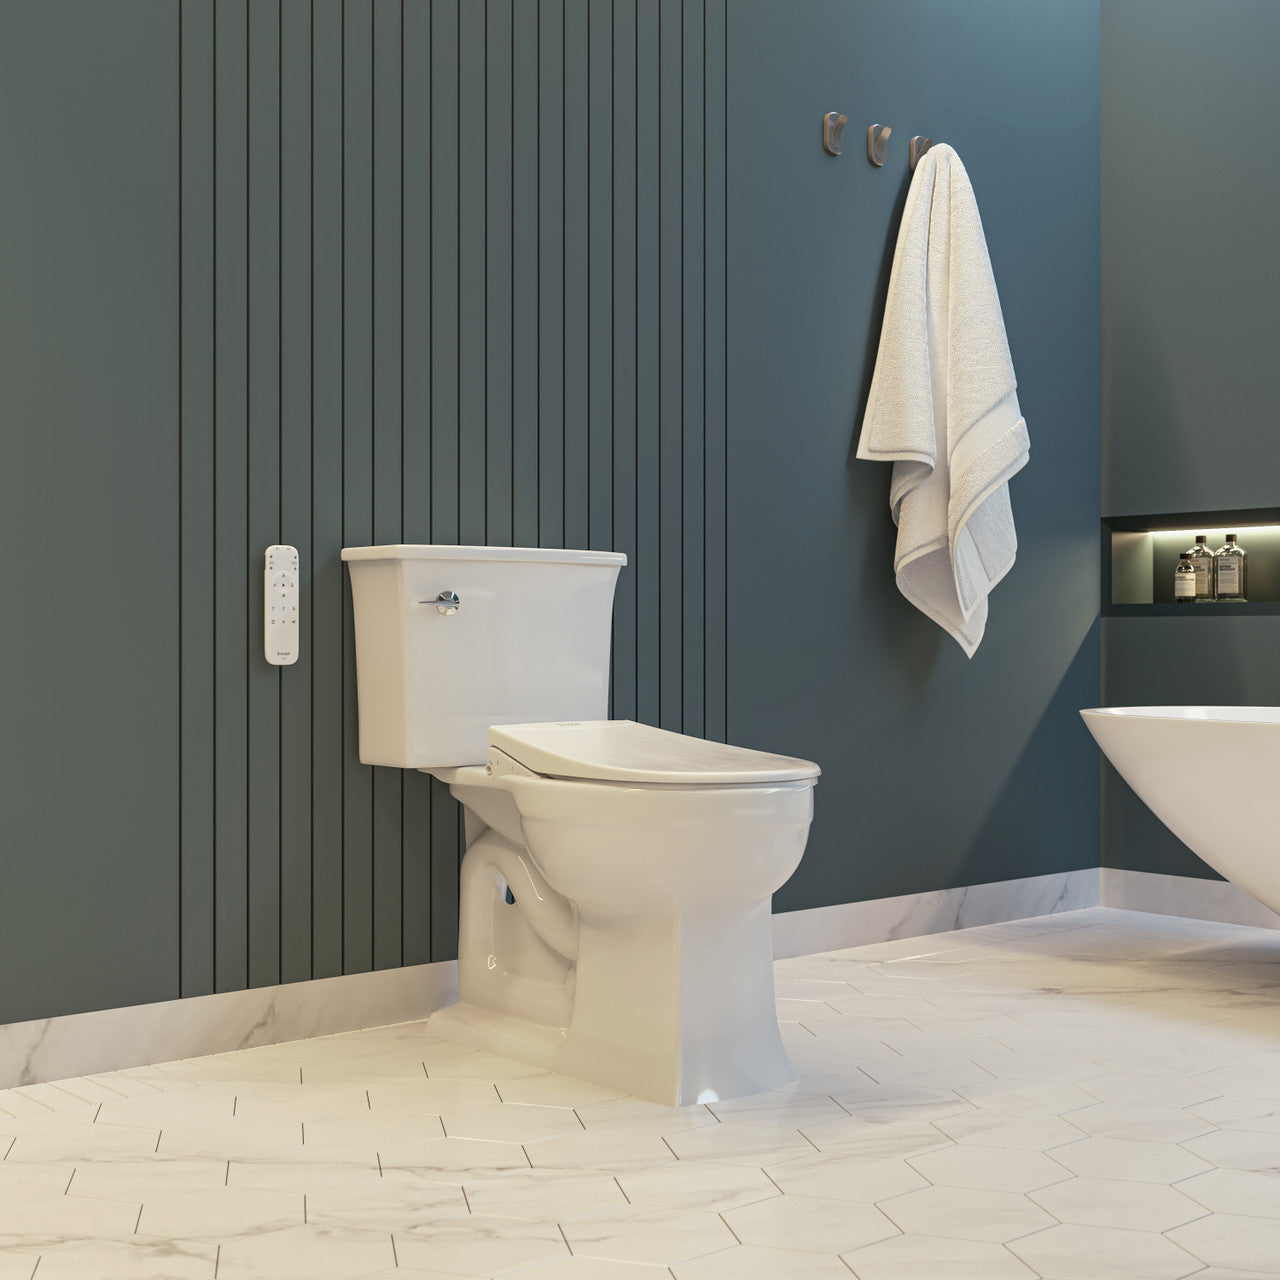 Brondell Swash Thinline T66 Luxury Bidet Toilet Seat with Remote Control